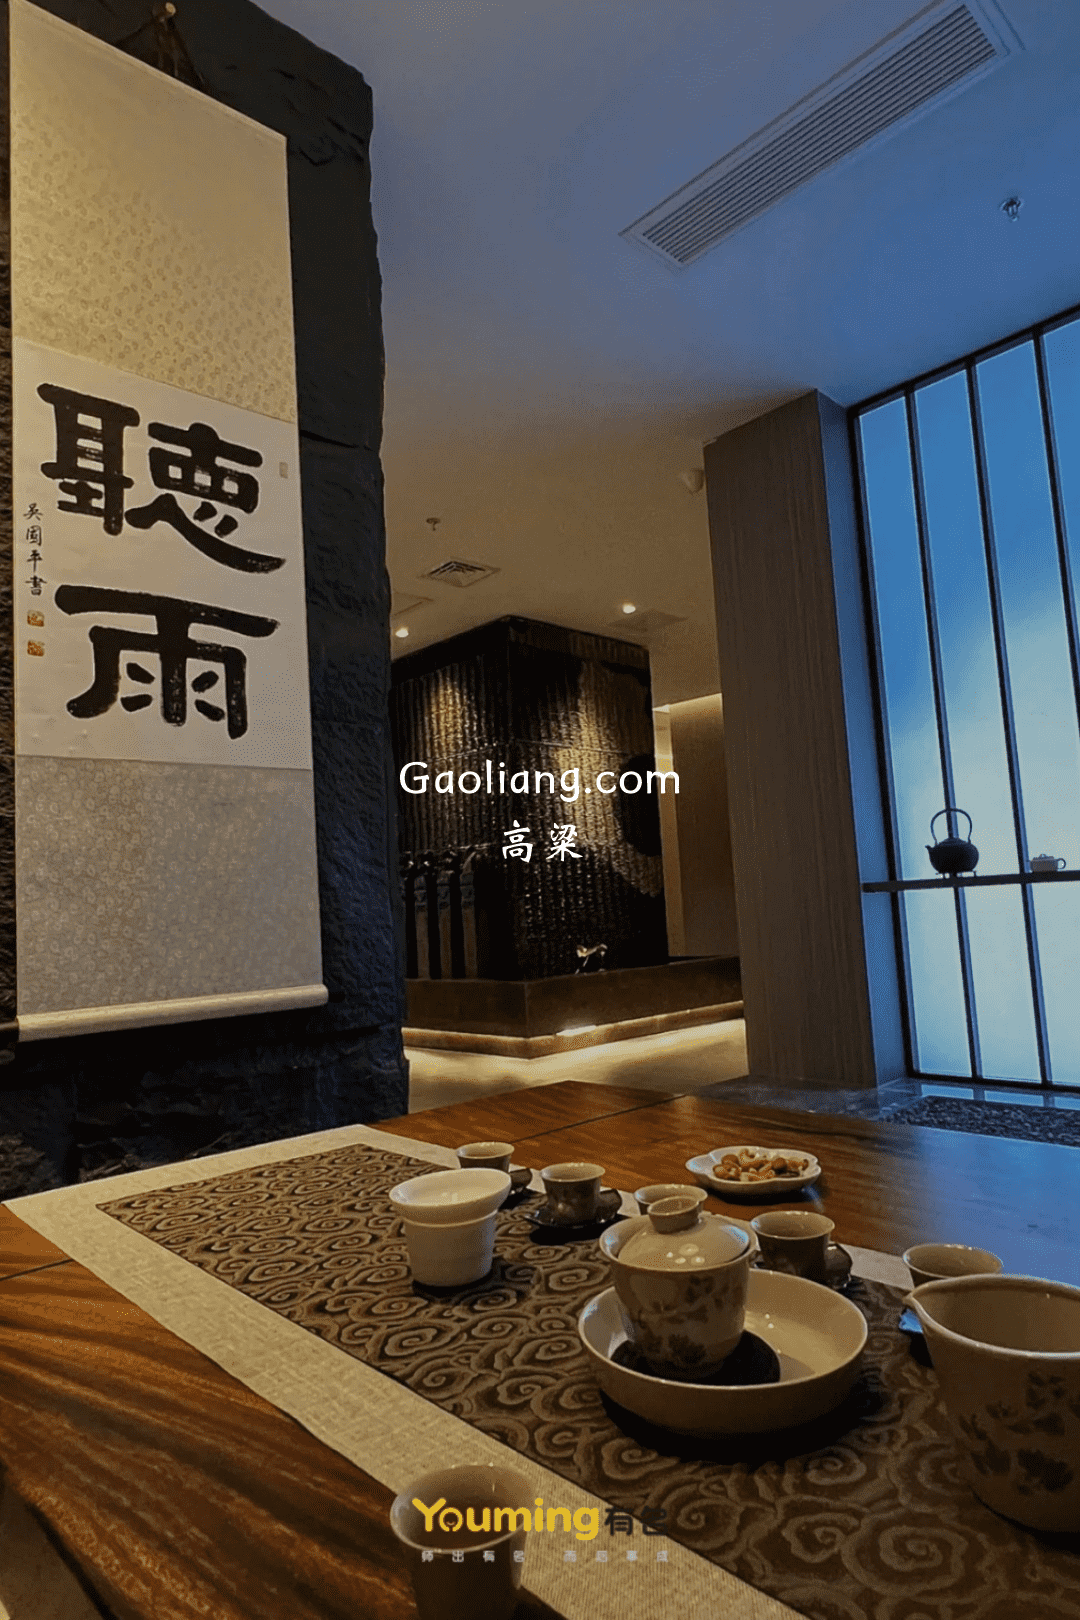 Gaoliang.com